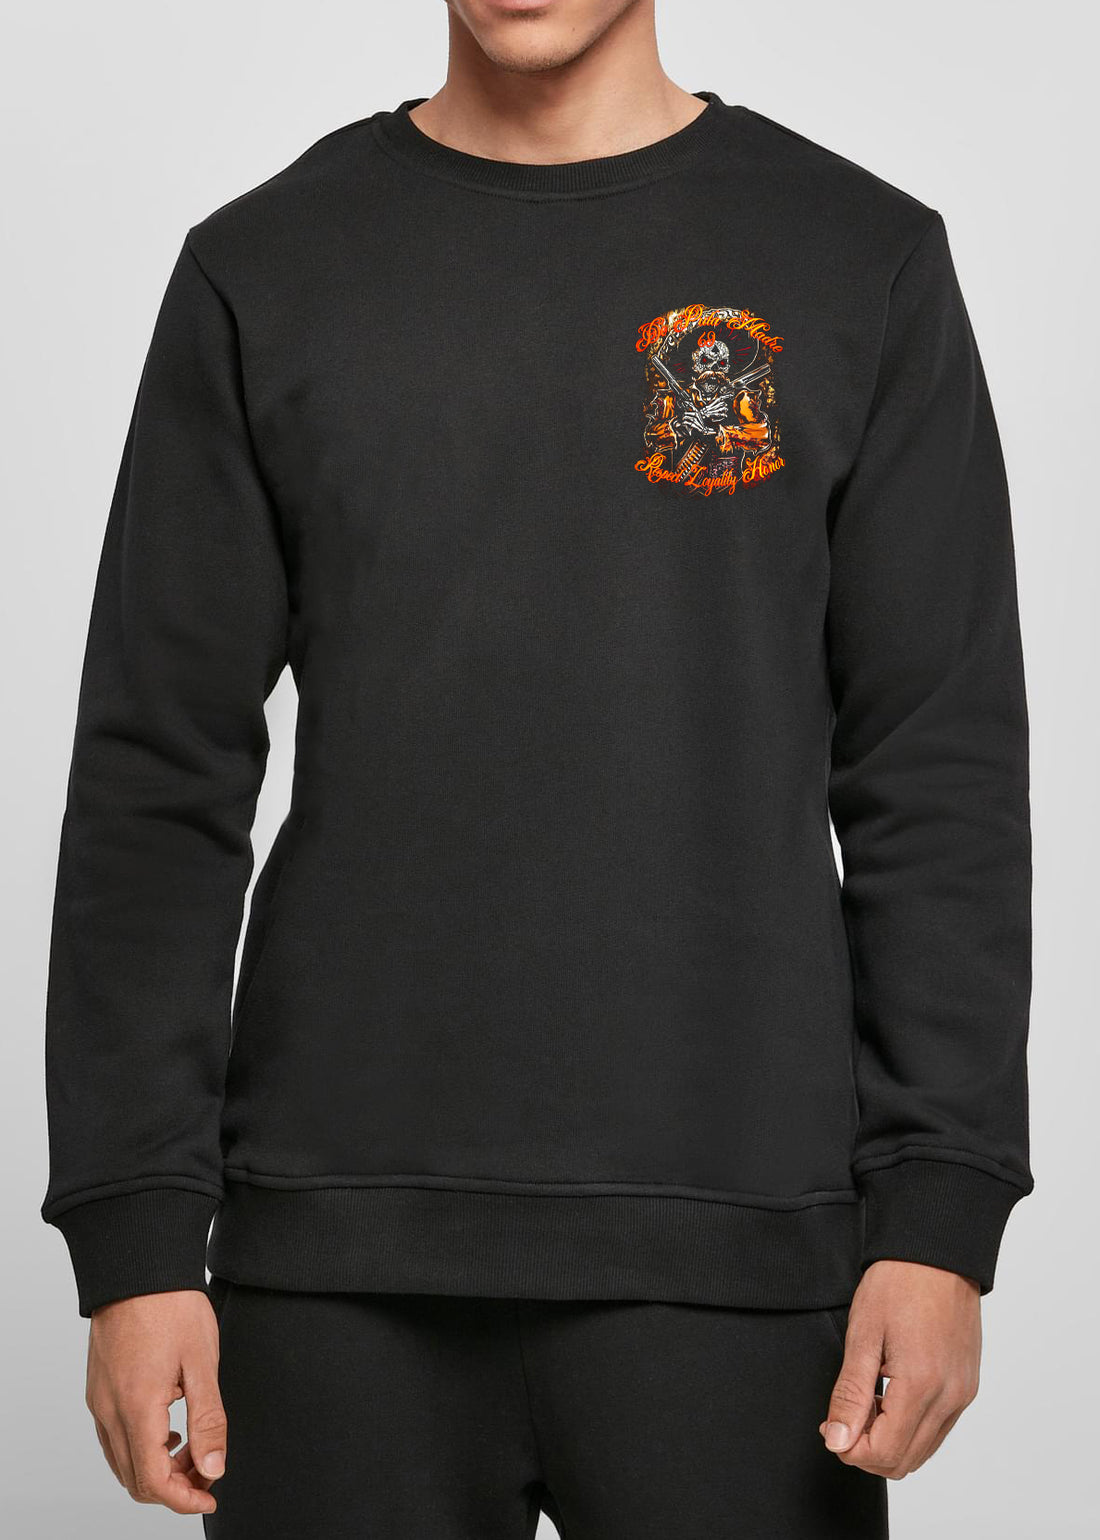 DPM 69 Men's sweatshirt design  Bandido